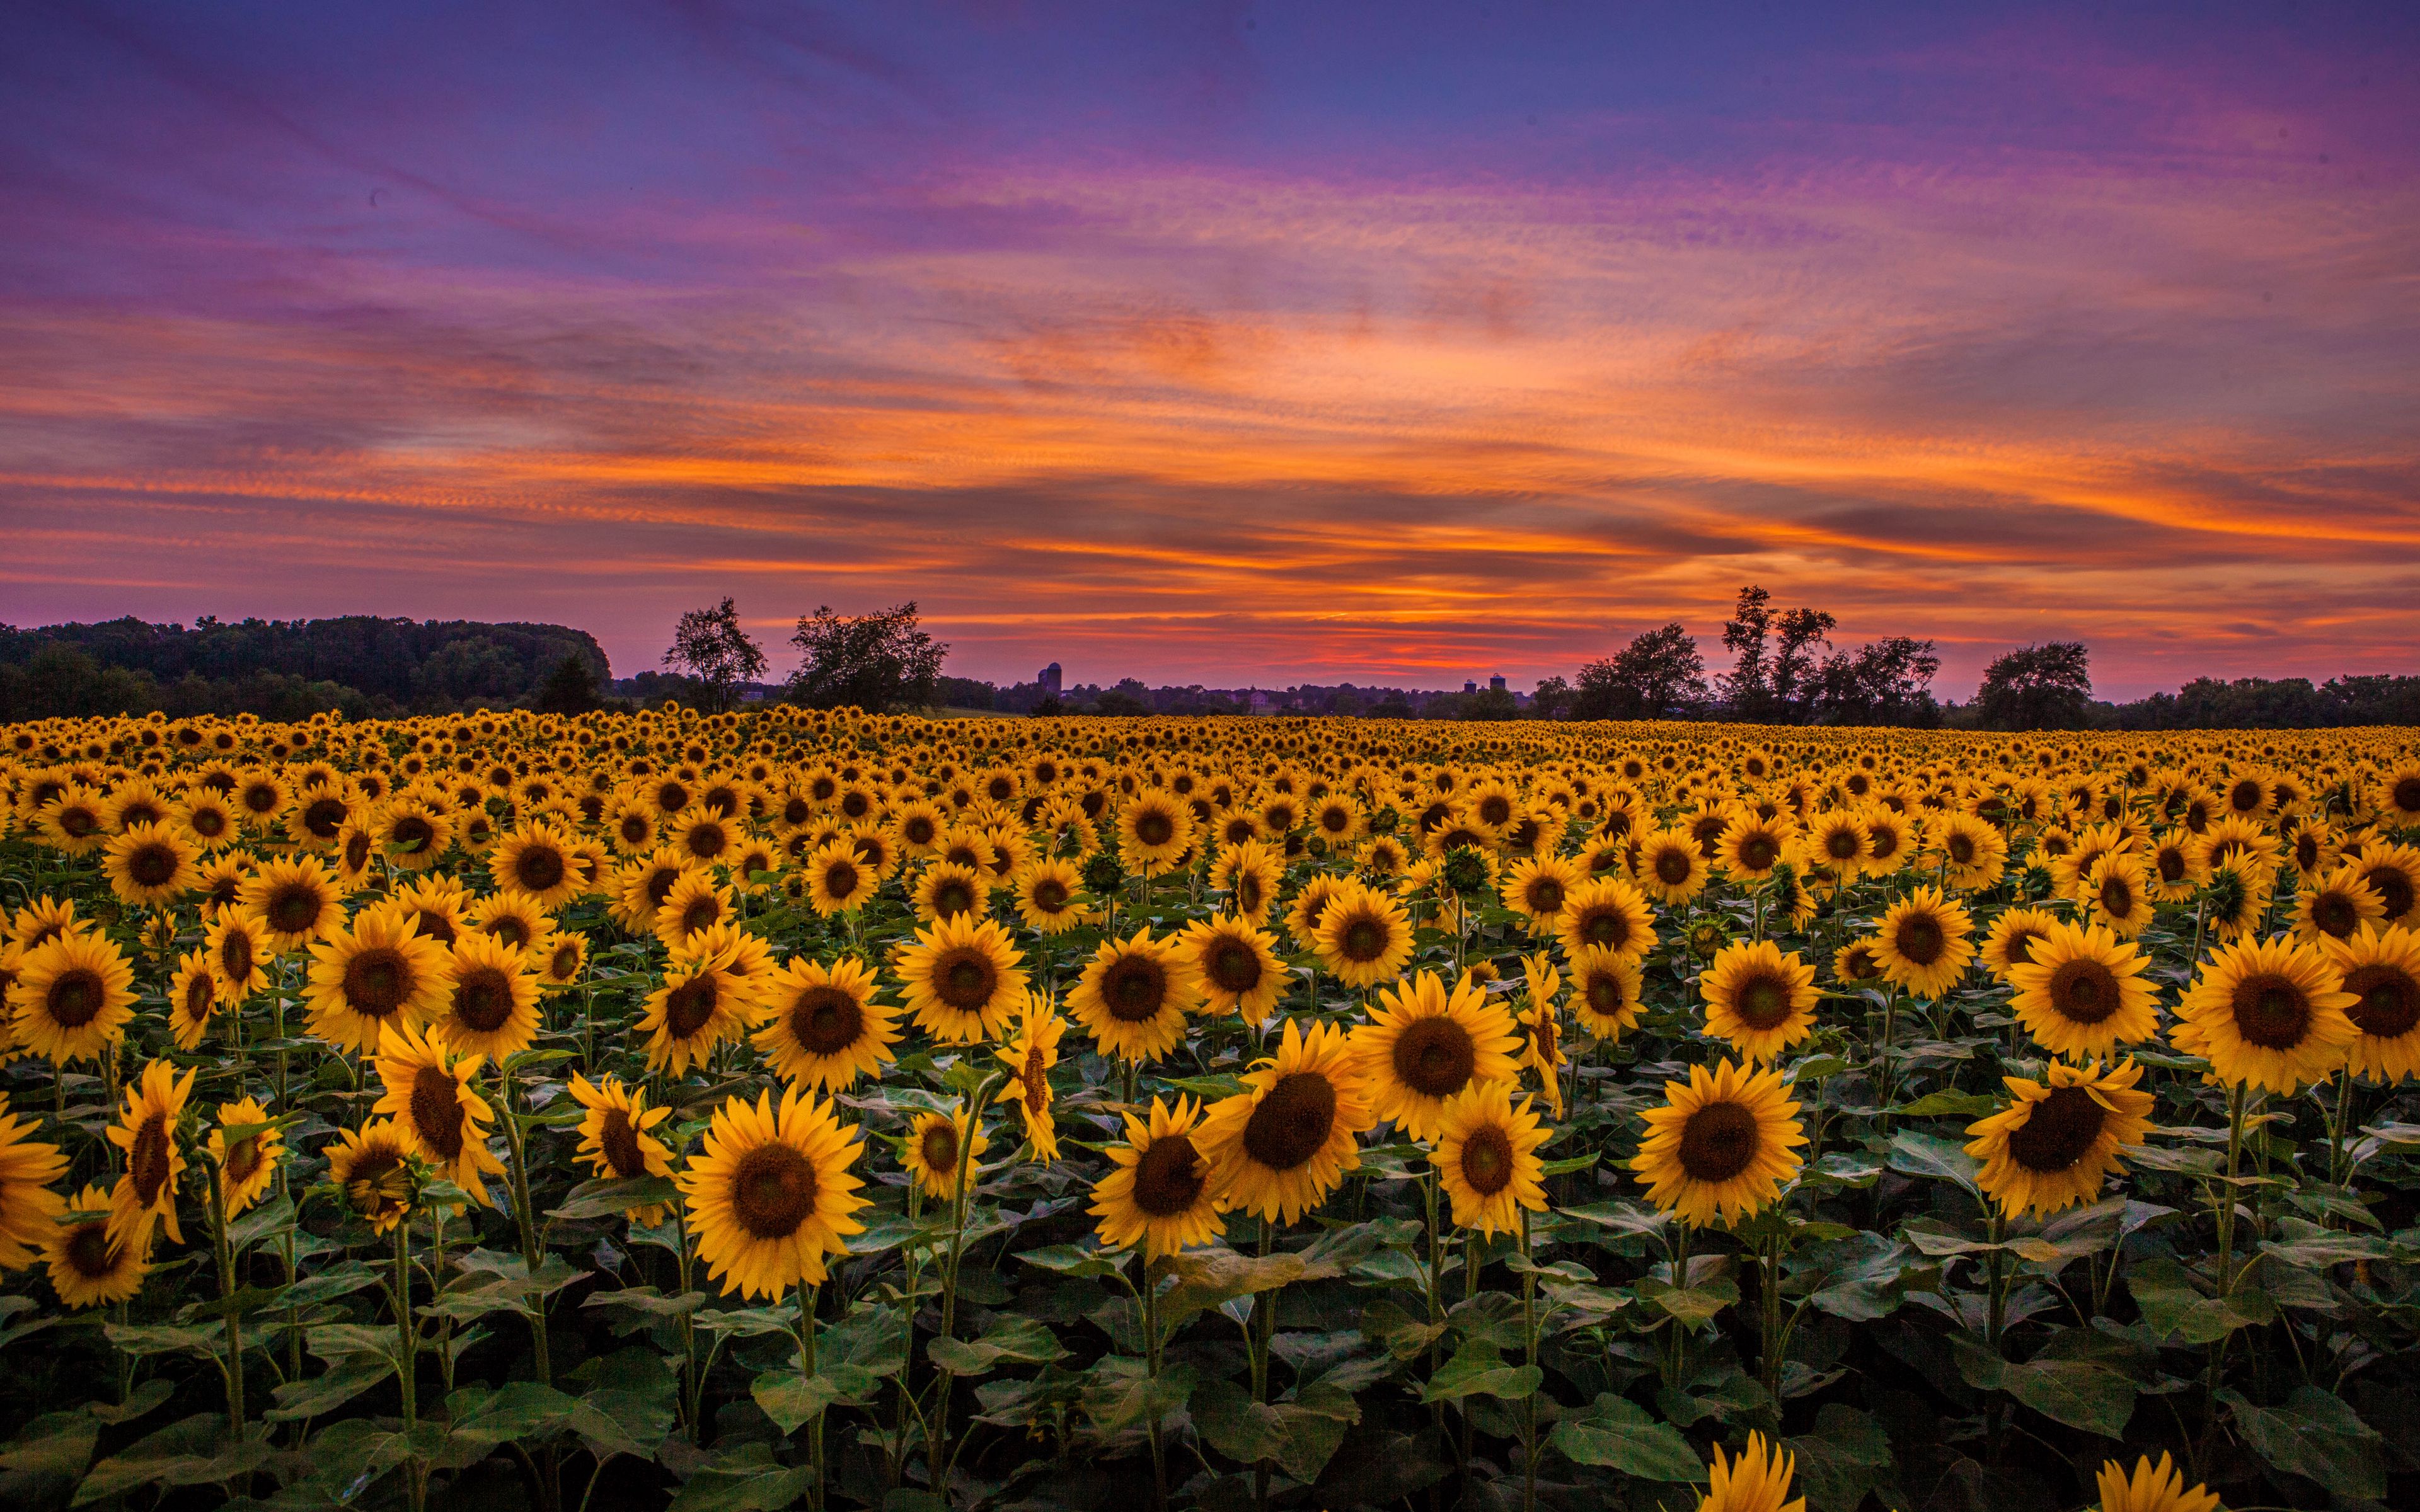 Download Wallpaper 3840x2400 Sunflowers Field Sunset Sky Clouds 4k